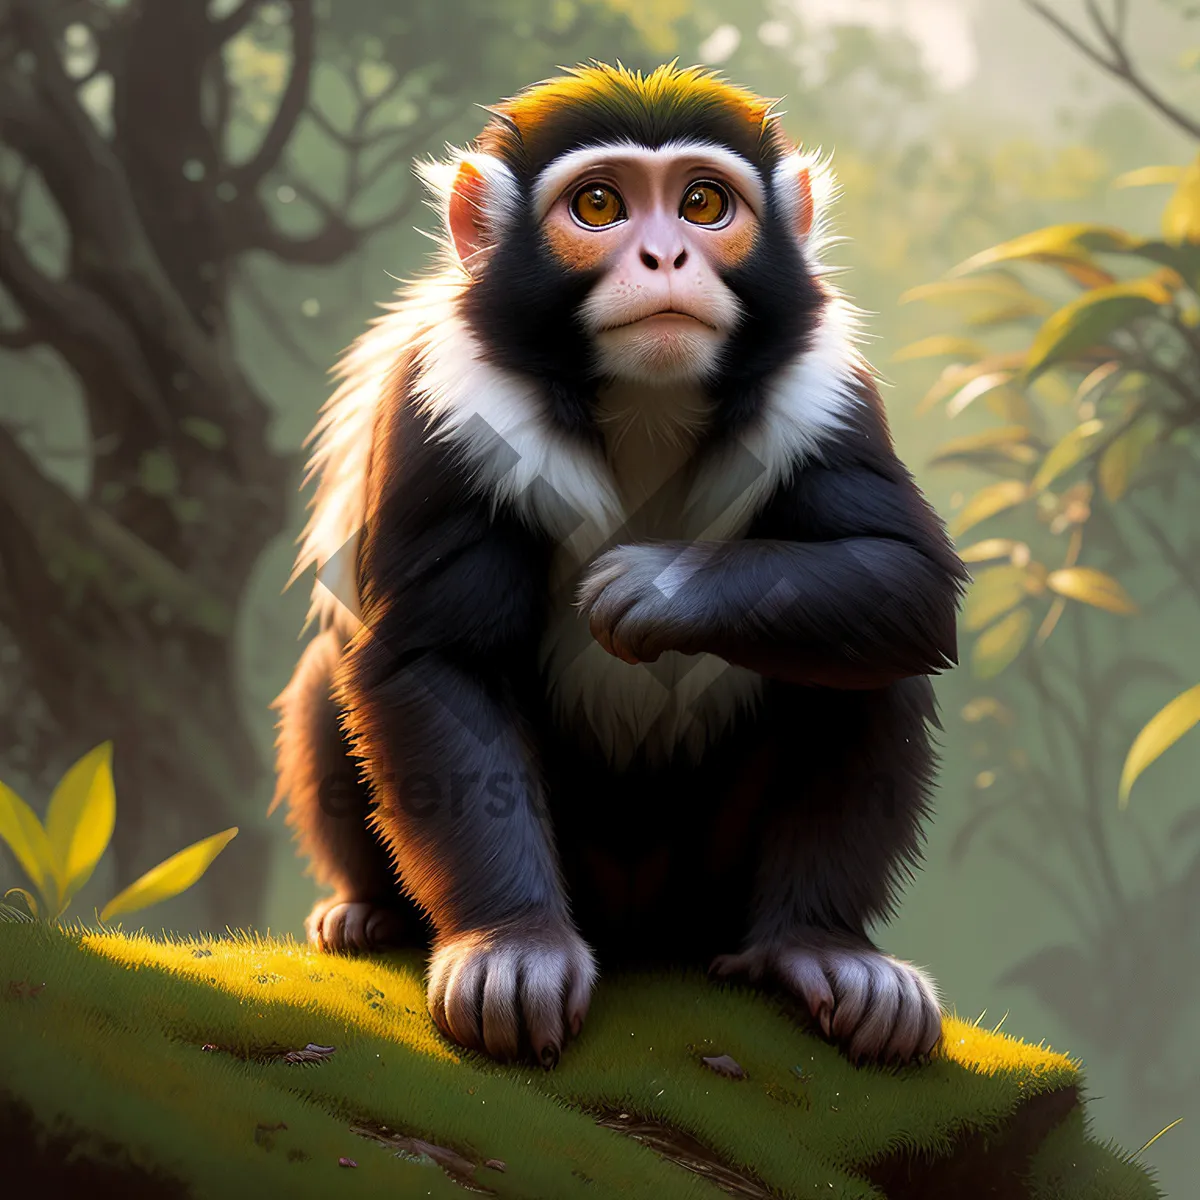 Picture of Wild Primate in Lush Jungle Habitat: A Captivating Wildlife Encounter.